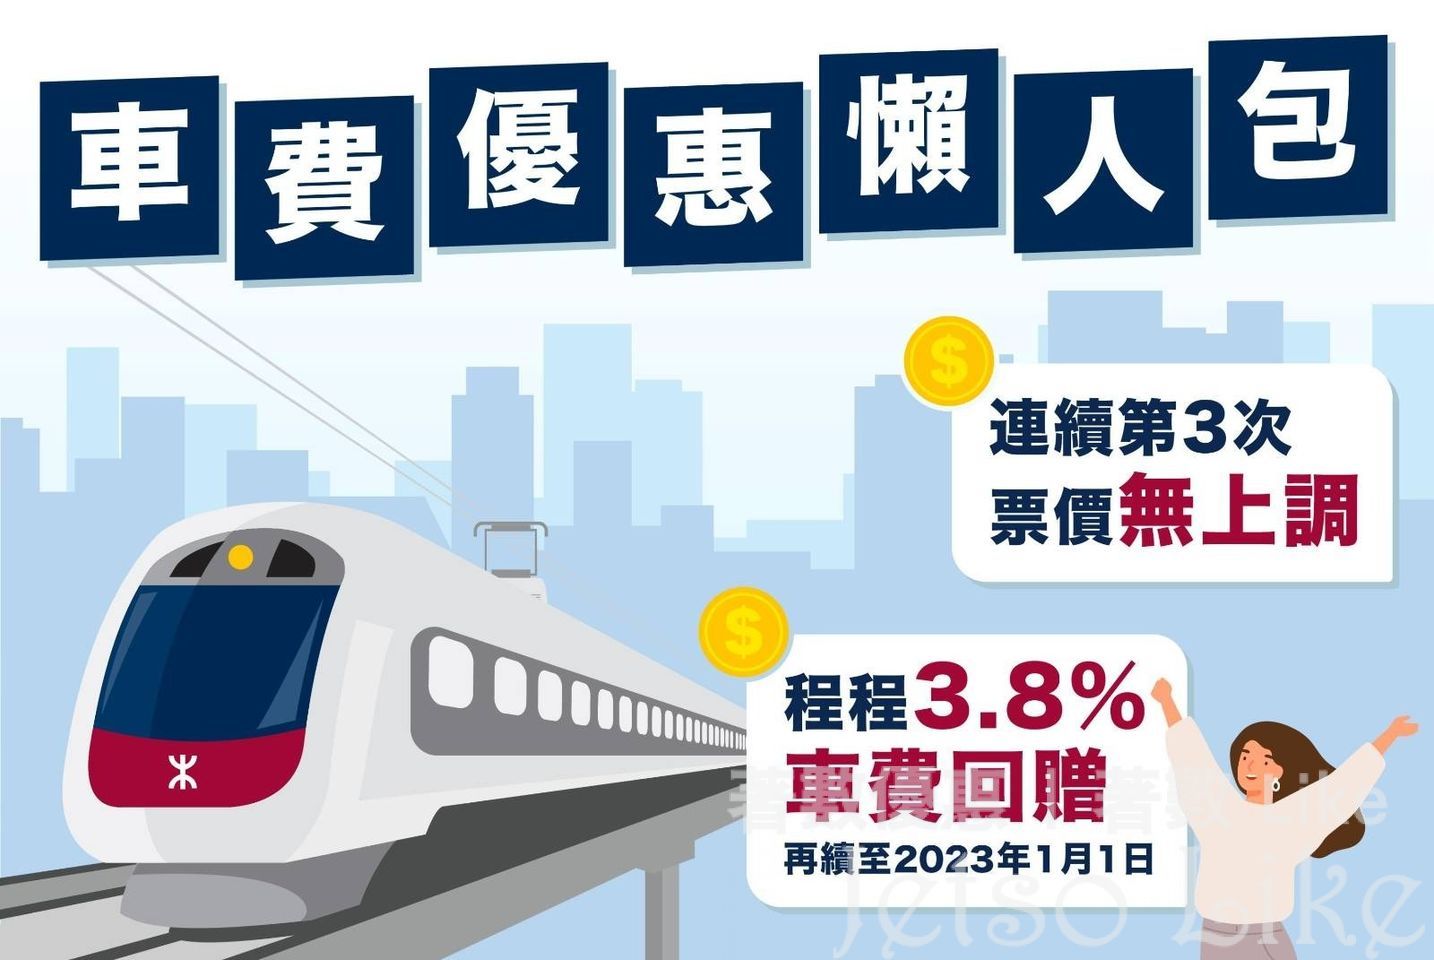 MTR 票價凍結 程程3.8%車費回贈